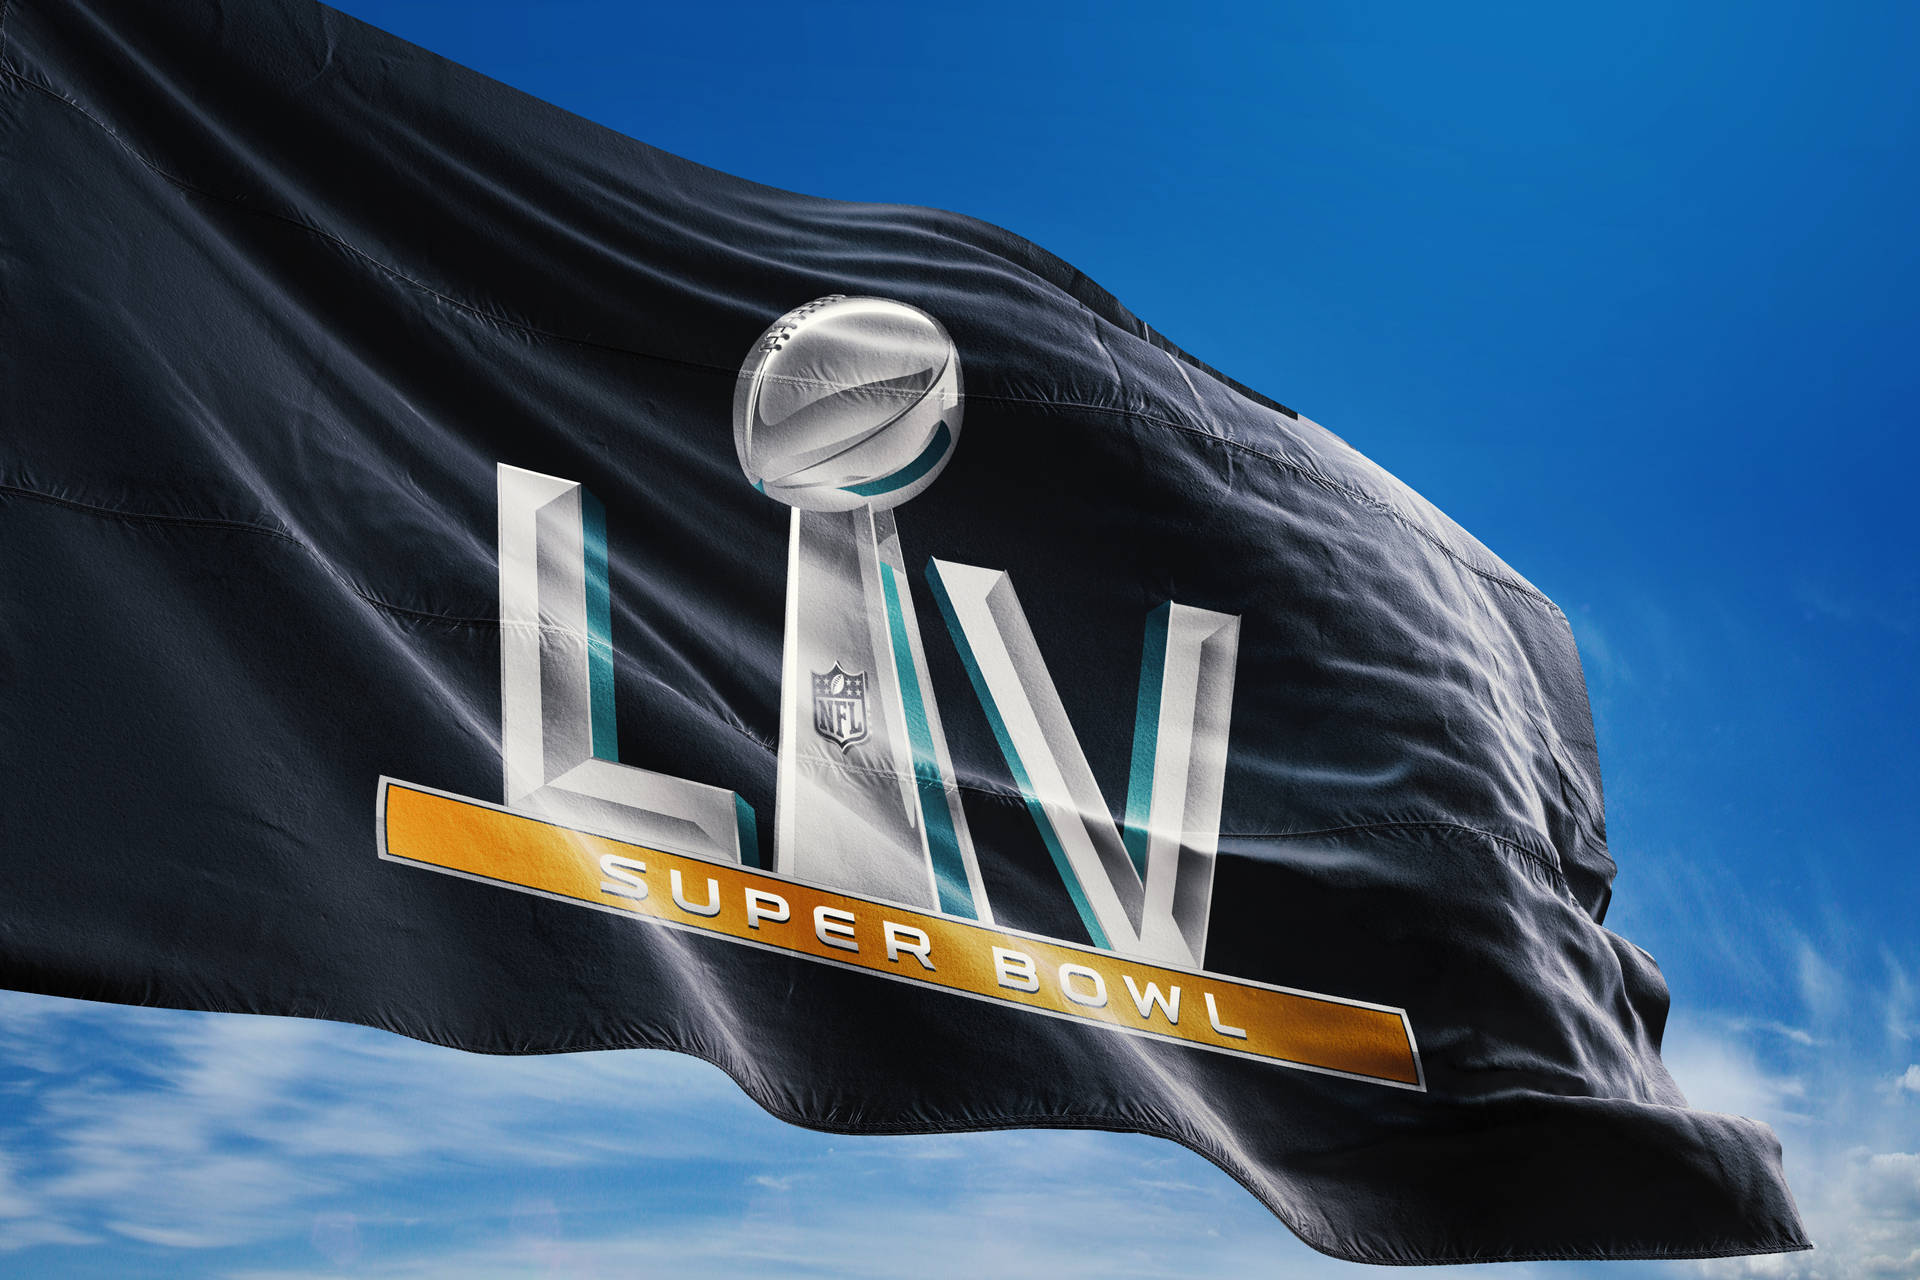 Super Bowl Lv Flag